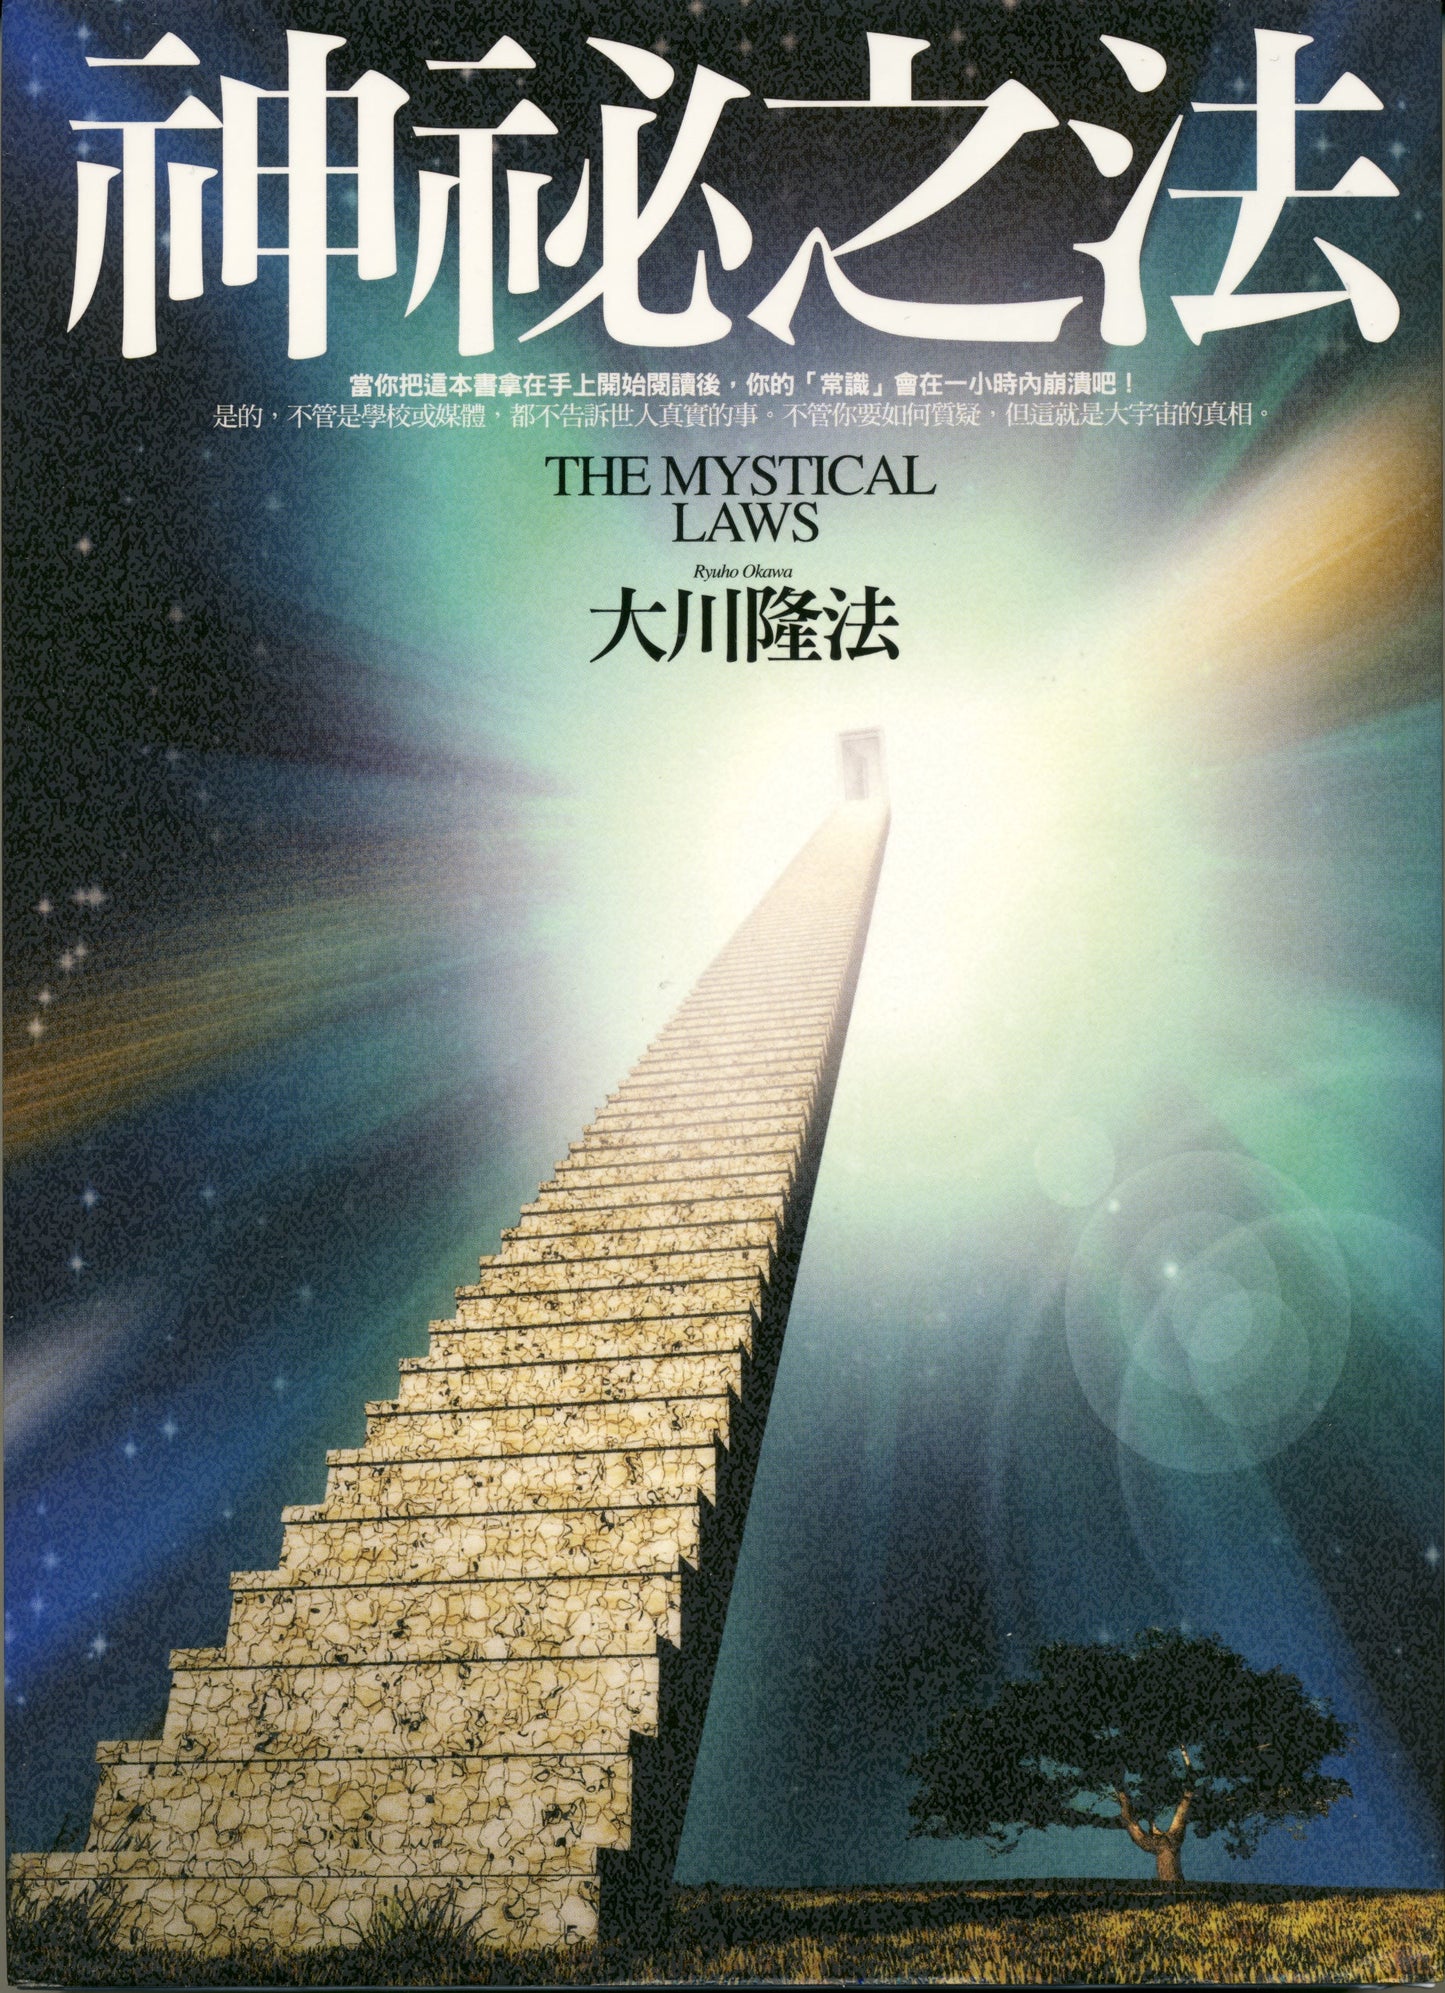 The Mystical Laws : Going Beyond the Dimensional Boundaries, Ryuho Okawa, Chinese Traditional - IRH Press International